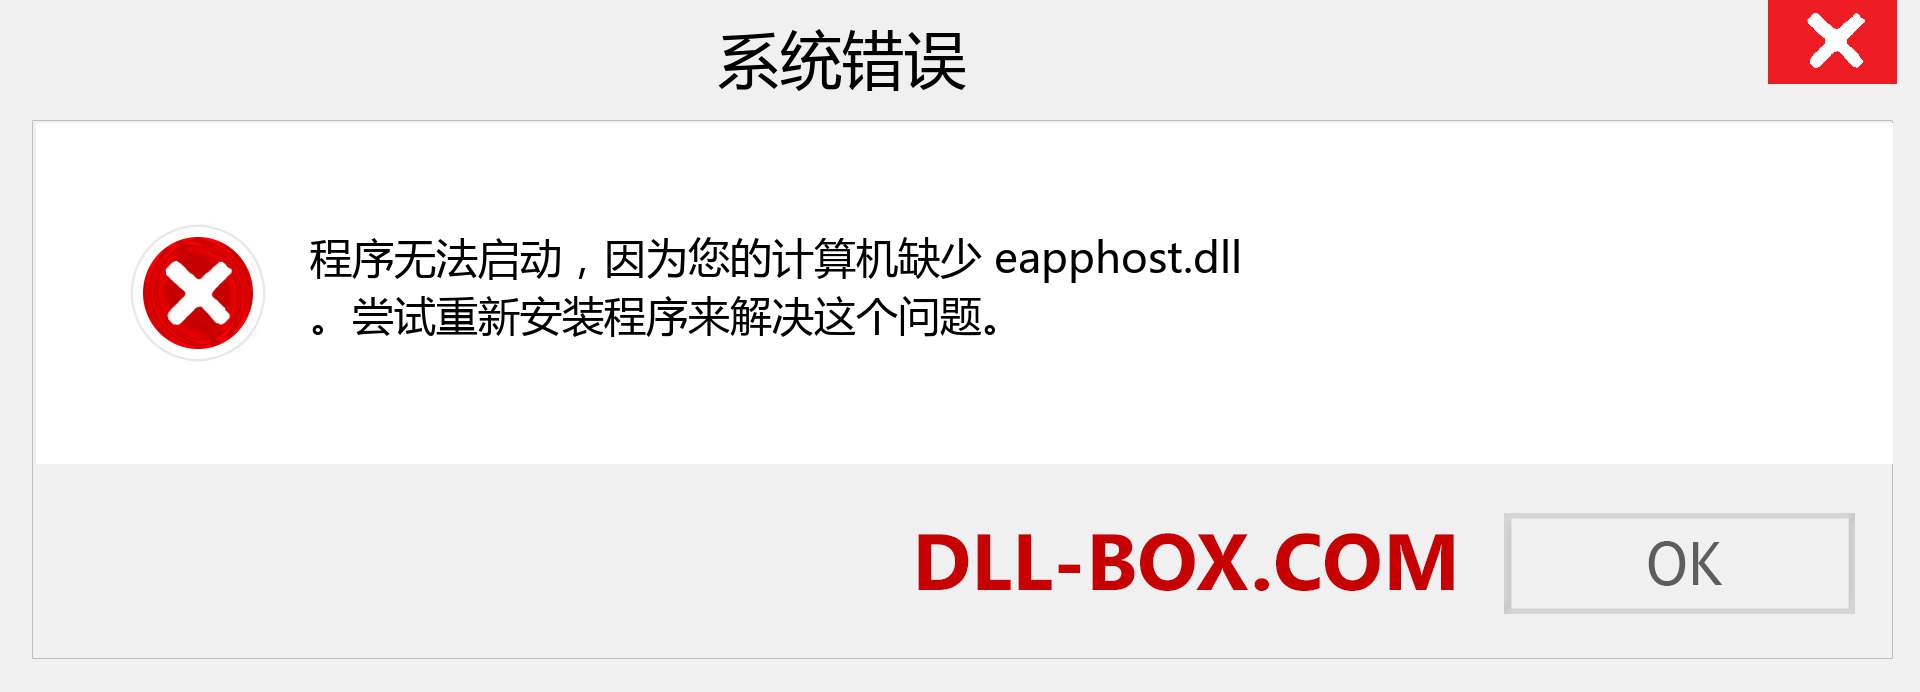 eapphost.dll 文件丢失？。 适用于 Windows 7、8、10 的下载 - 修复 Windows、照片、图像上的 eapphost dll 丢失错误